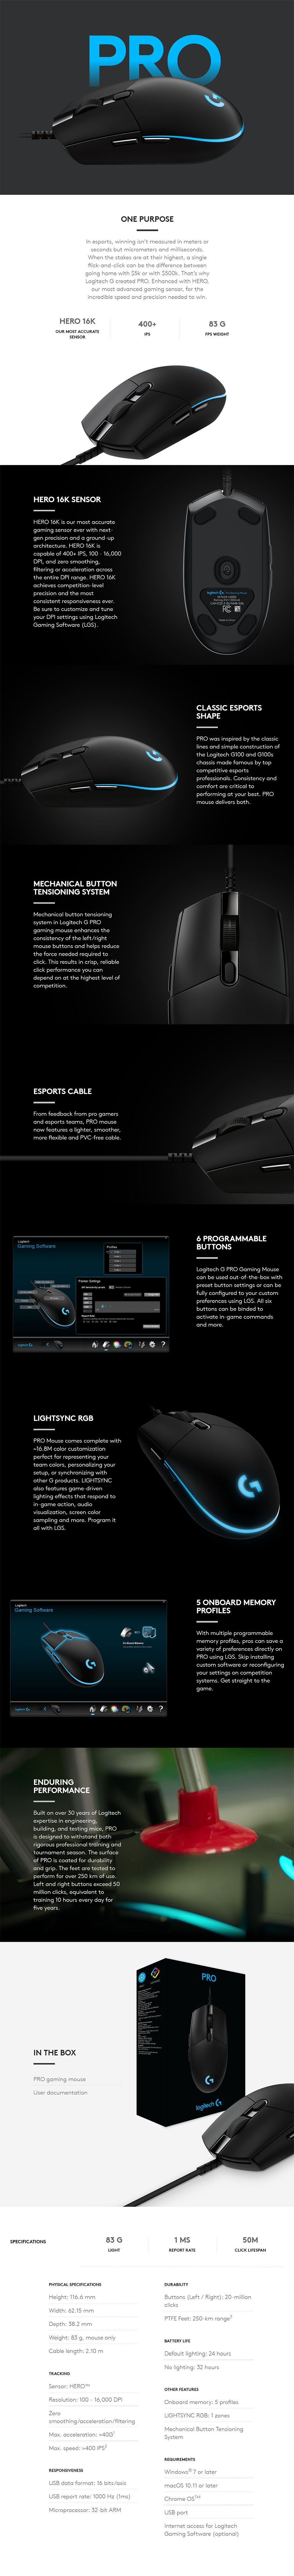 Logitech G Pro Gaming Mouse with HERO 16K Sensor - Desktop Overview